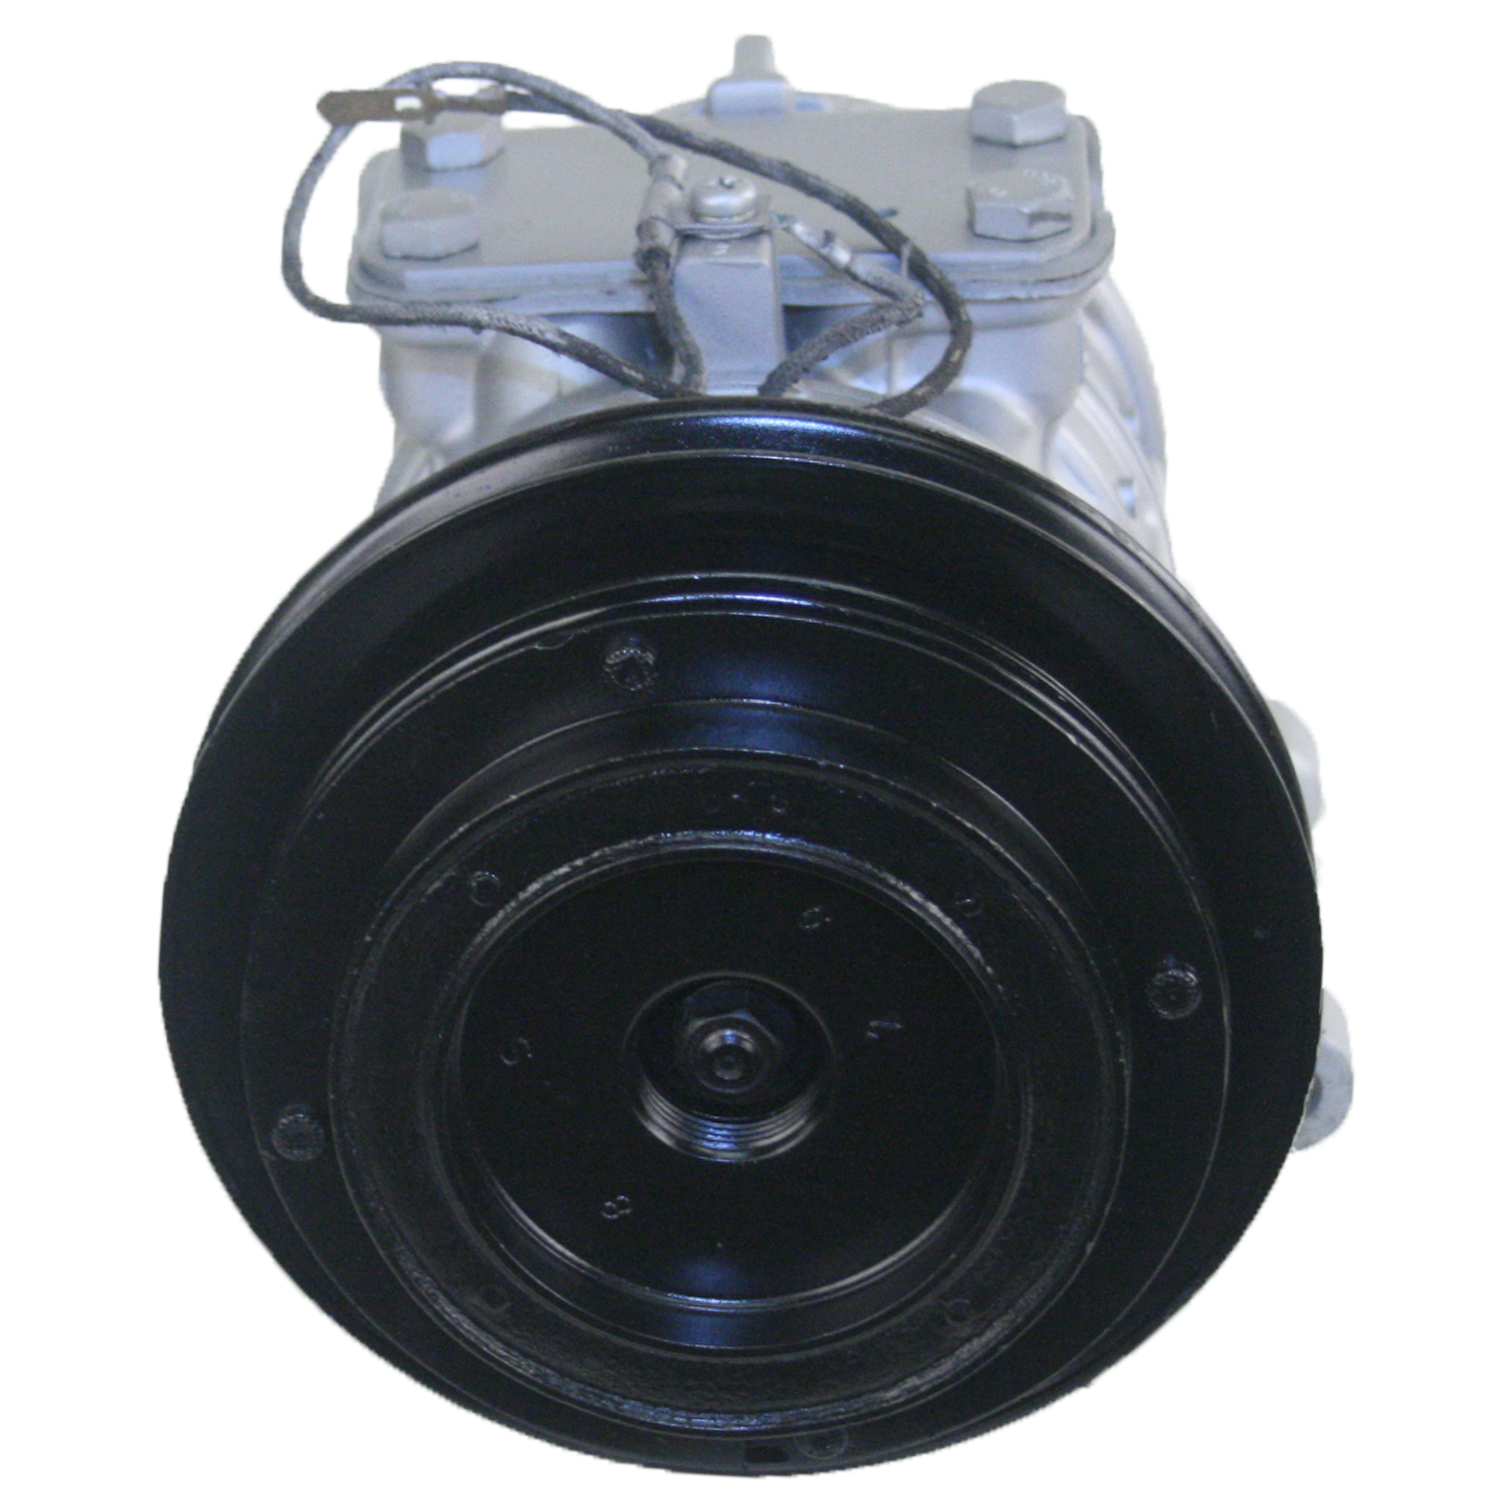 TCW Compressor 31012.101 Remanufactured Product Image field_60b6a13a6e67c